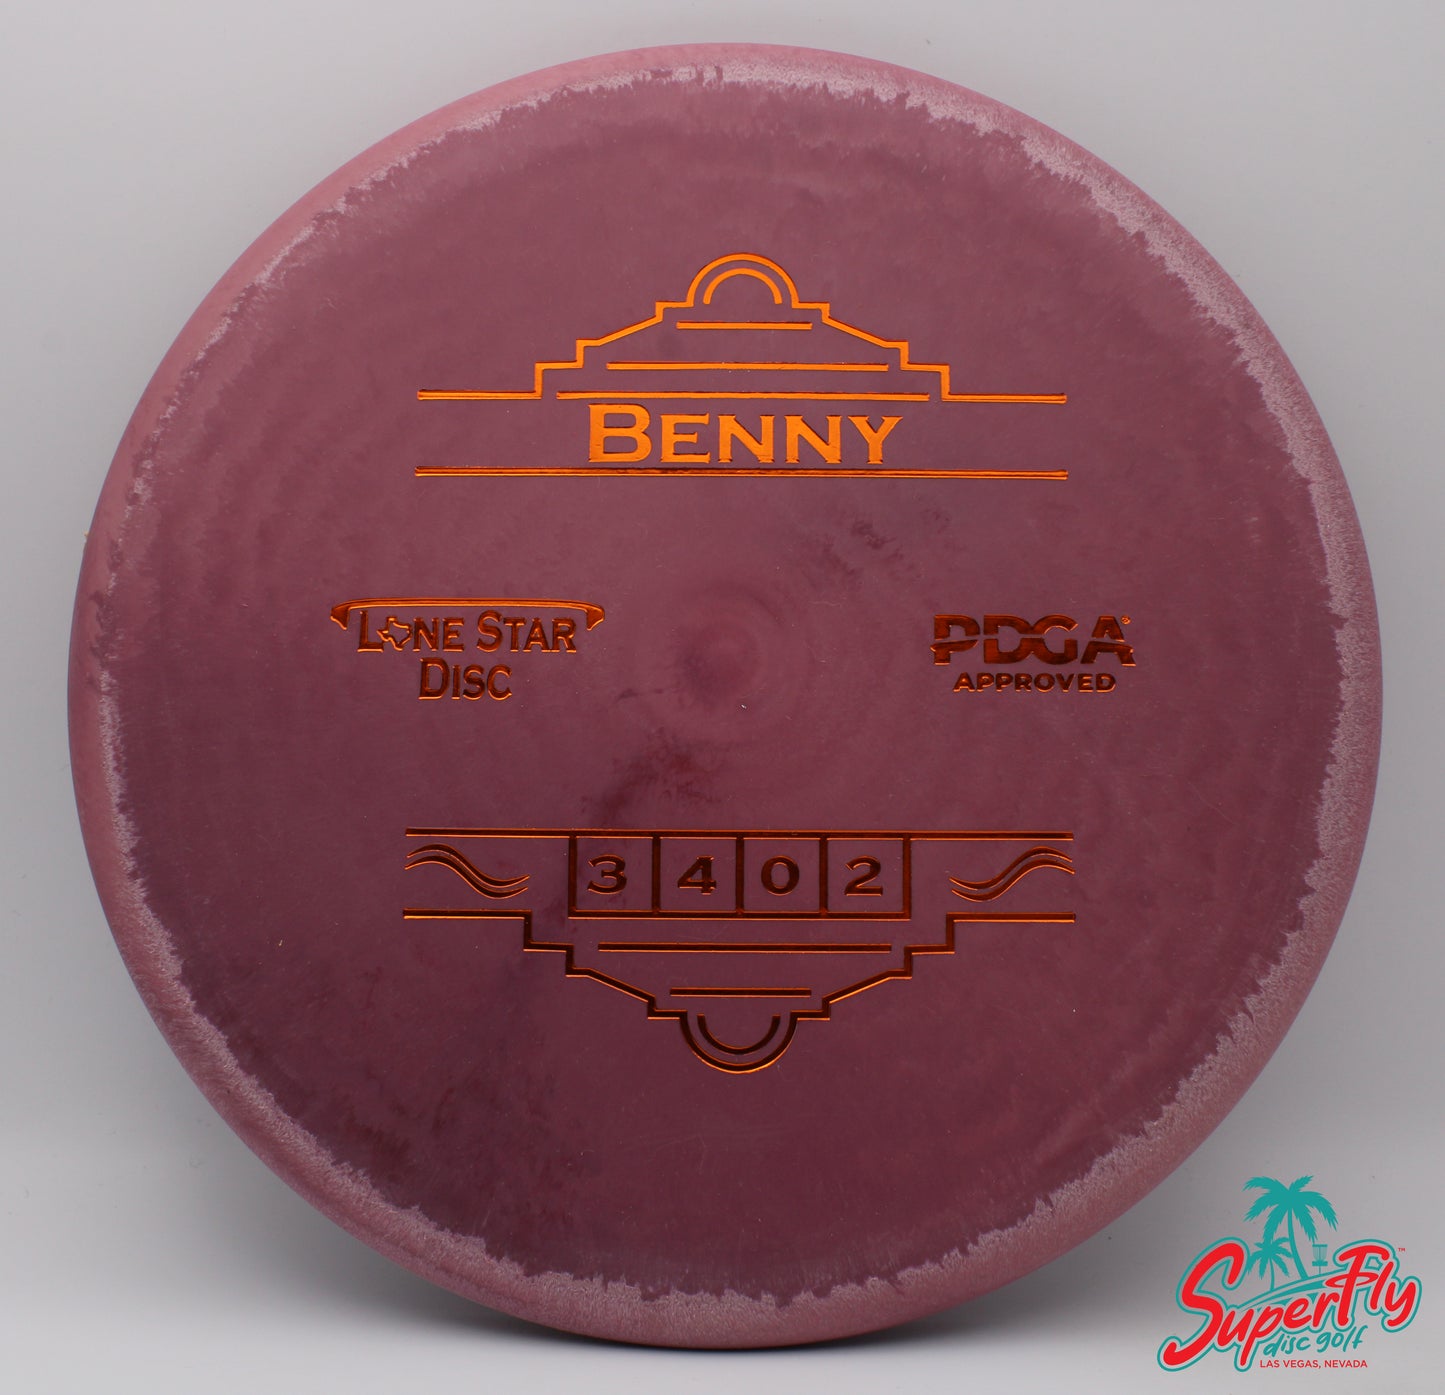 Lone Star Disc Delta 1 Benny